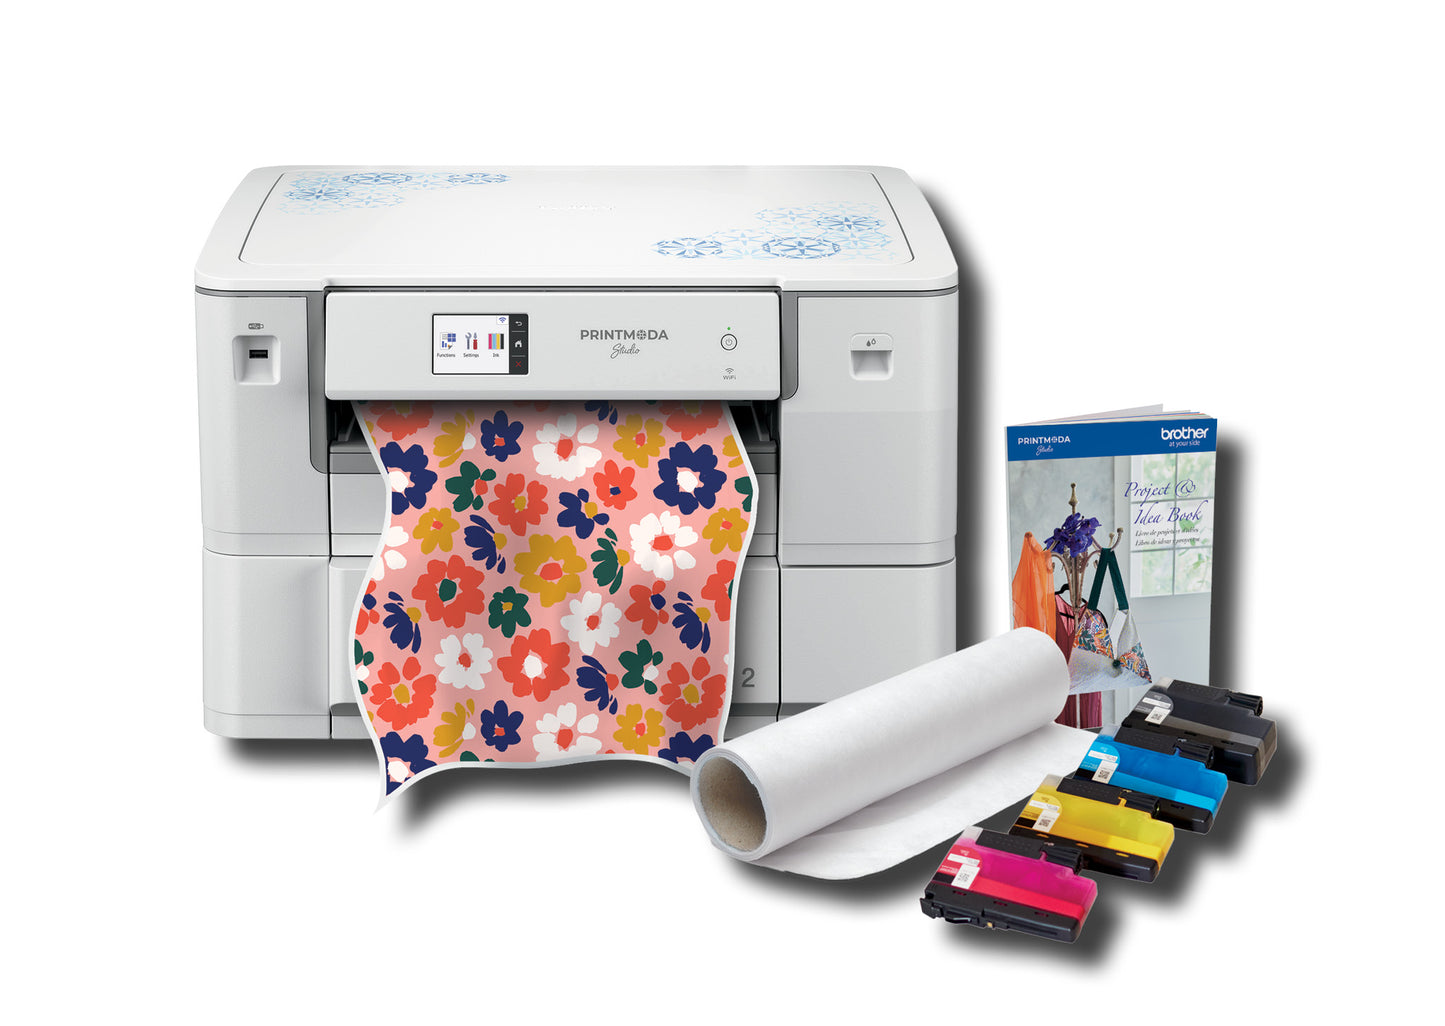 Brother PrintModa Fabric Printer with Starter Kit